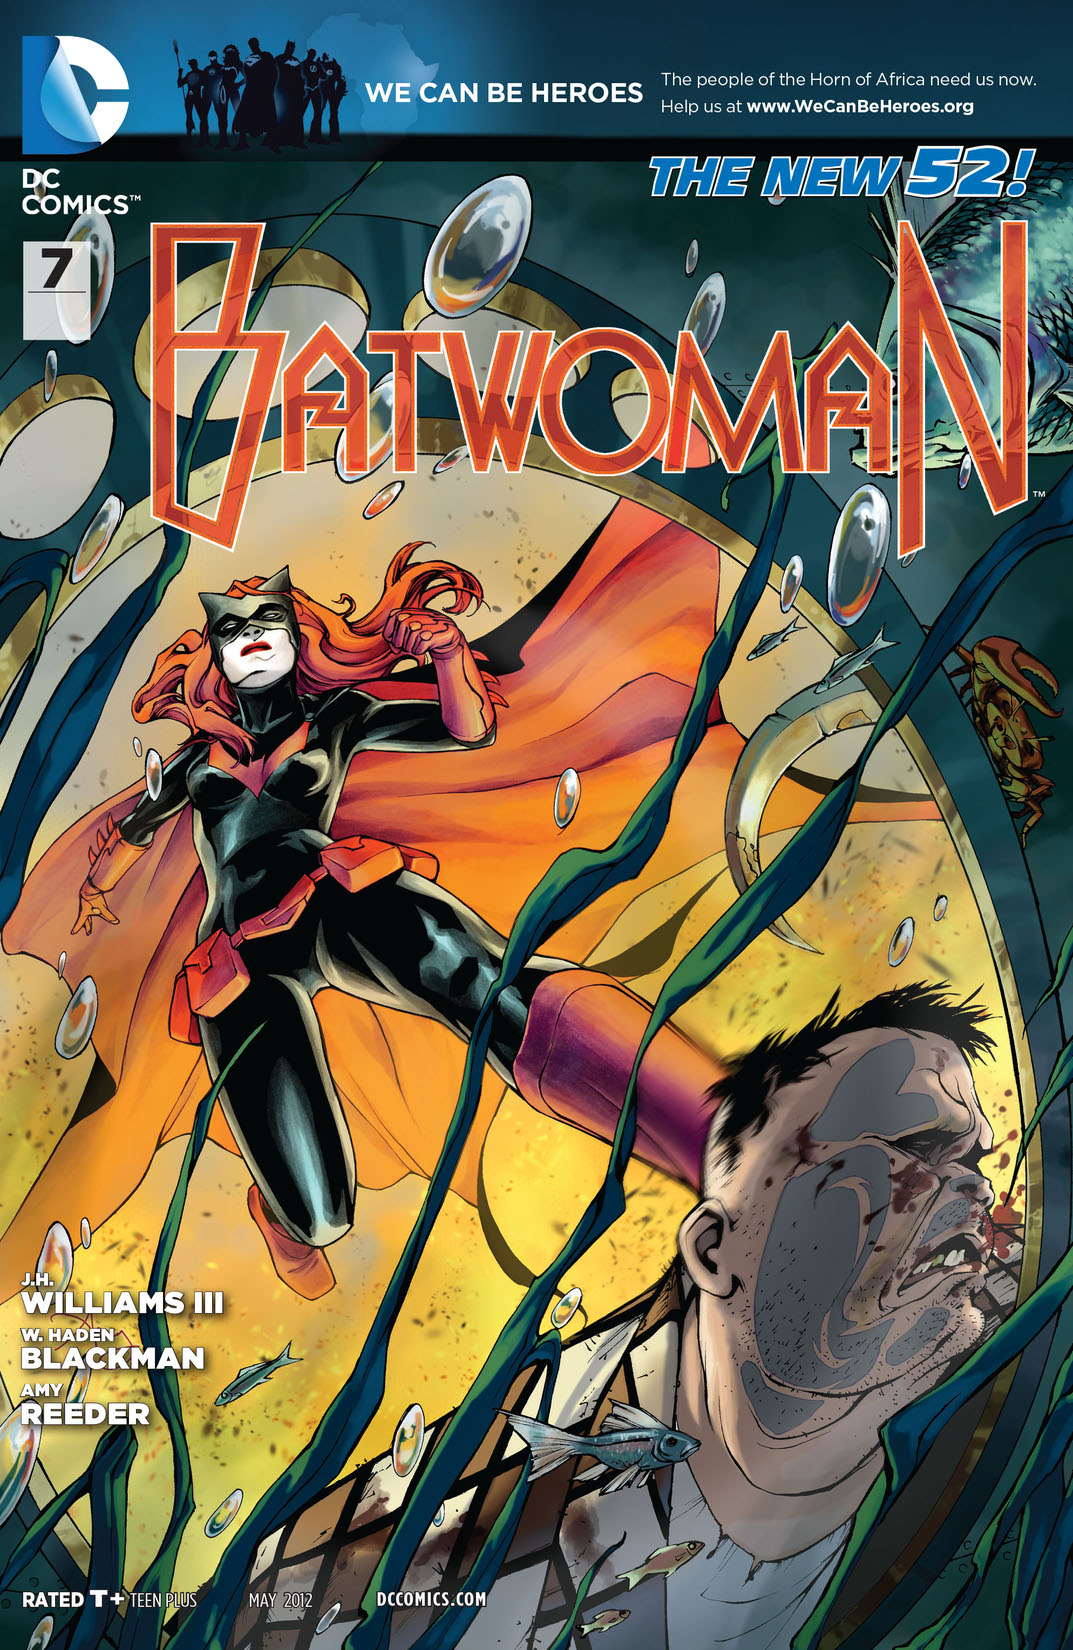 Batwoman (2011-) #7 preview images